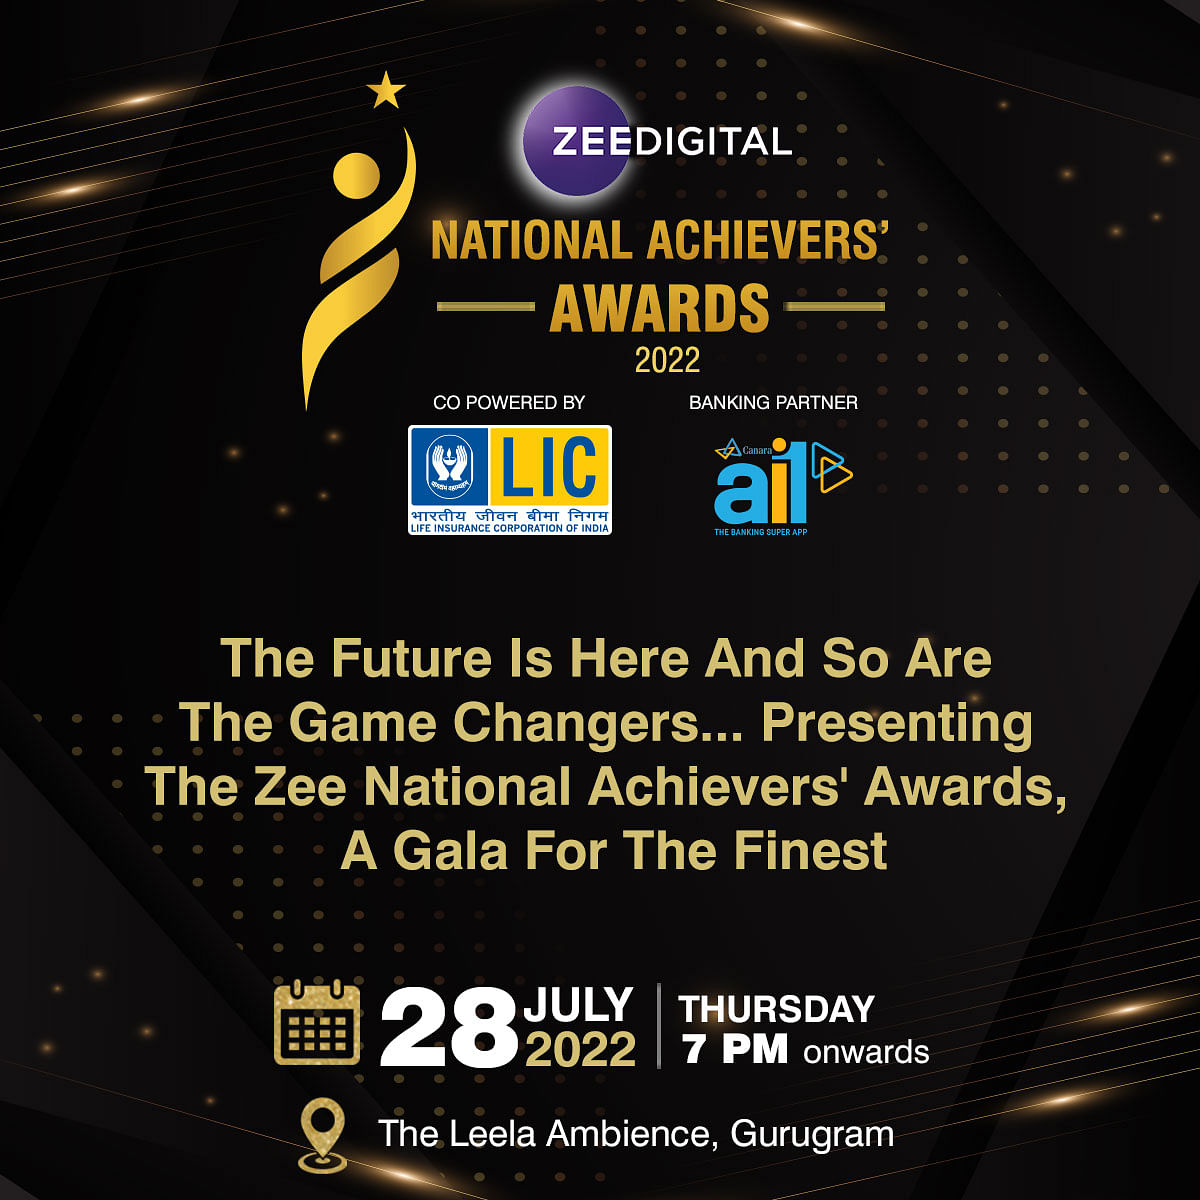 ZEE Digital to host the Zee National Achievers’ Awards 2022